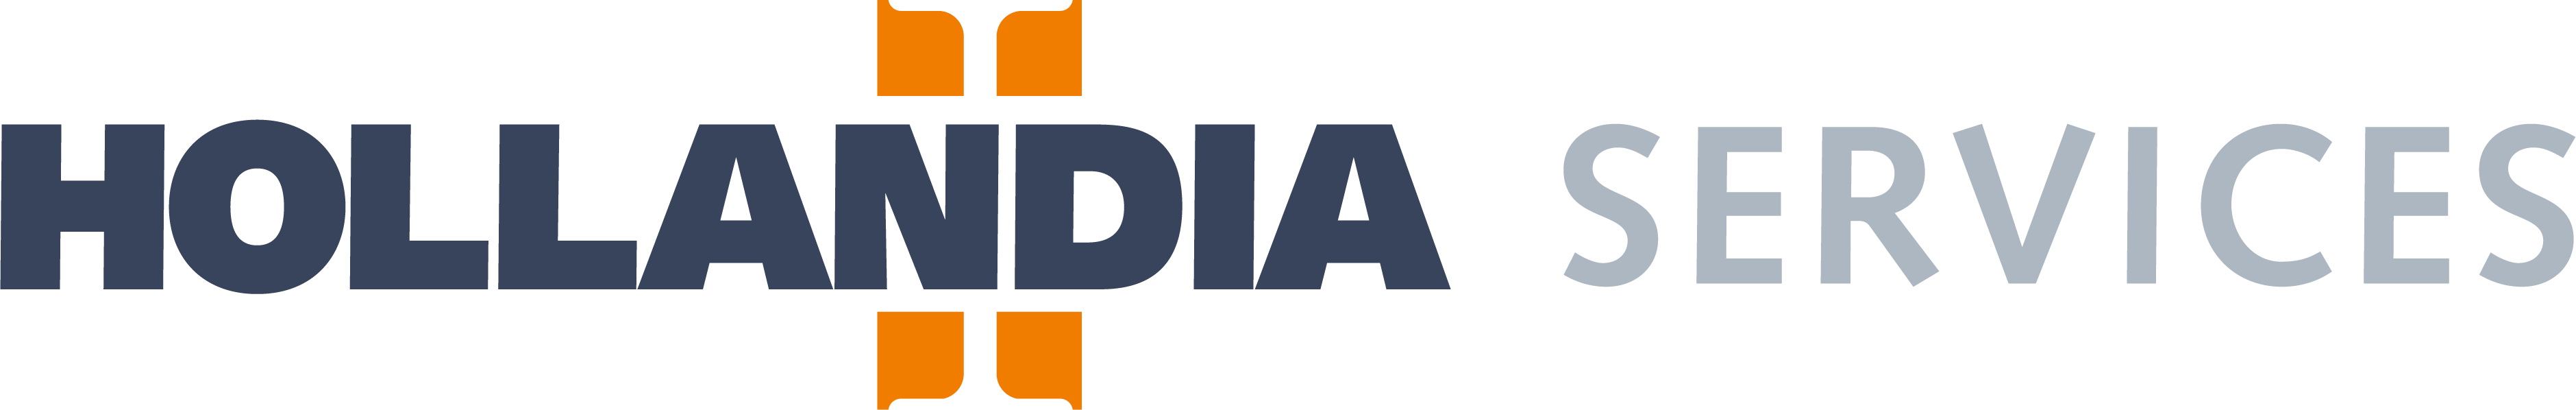 Hollandia Services referenties logo